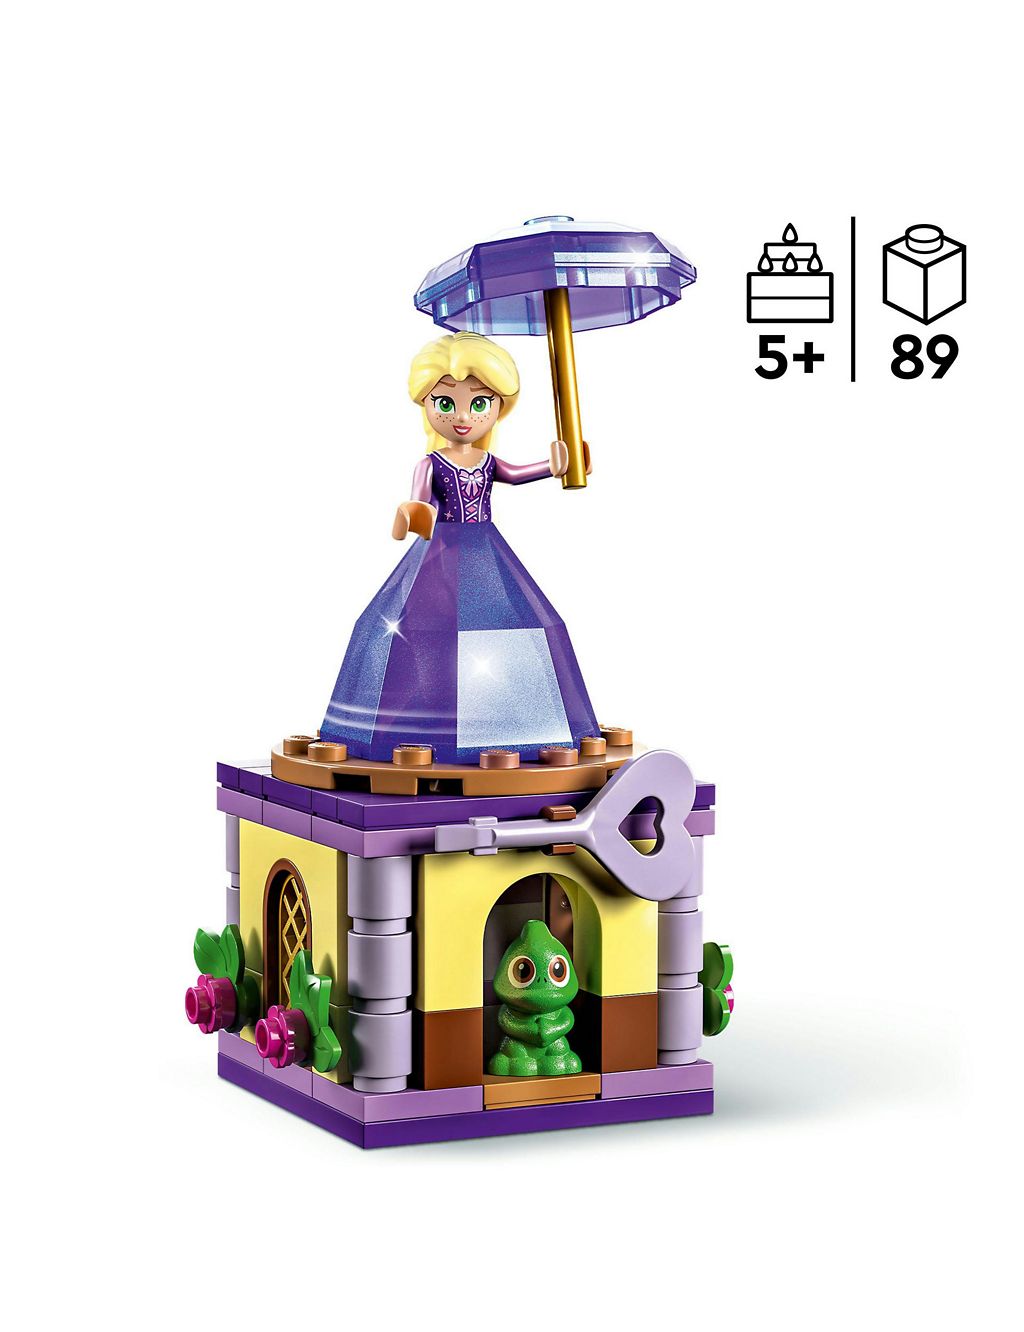 LEGO|Disney Princess Twirling Rapunzel Set (5+ Yrs) 1 of 6